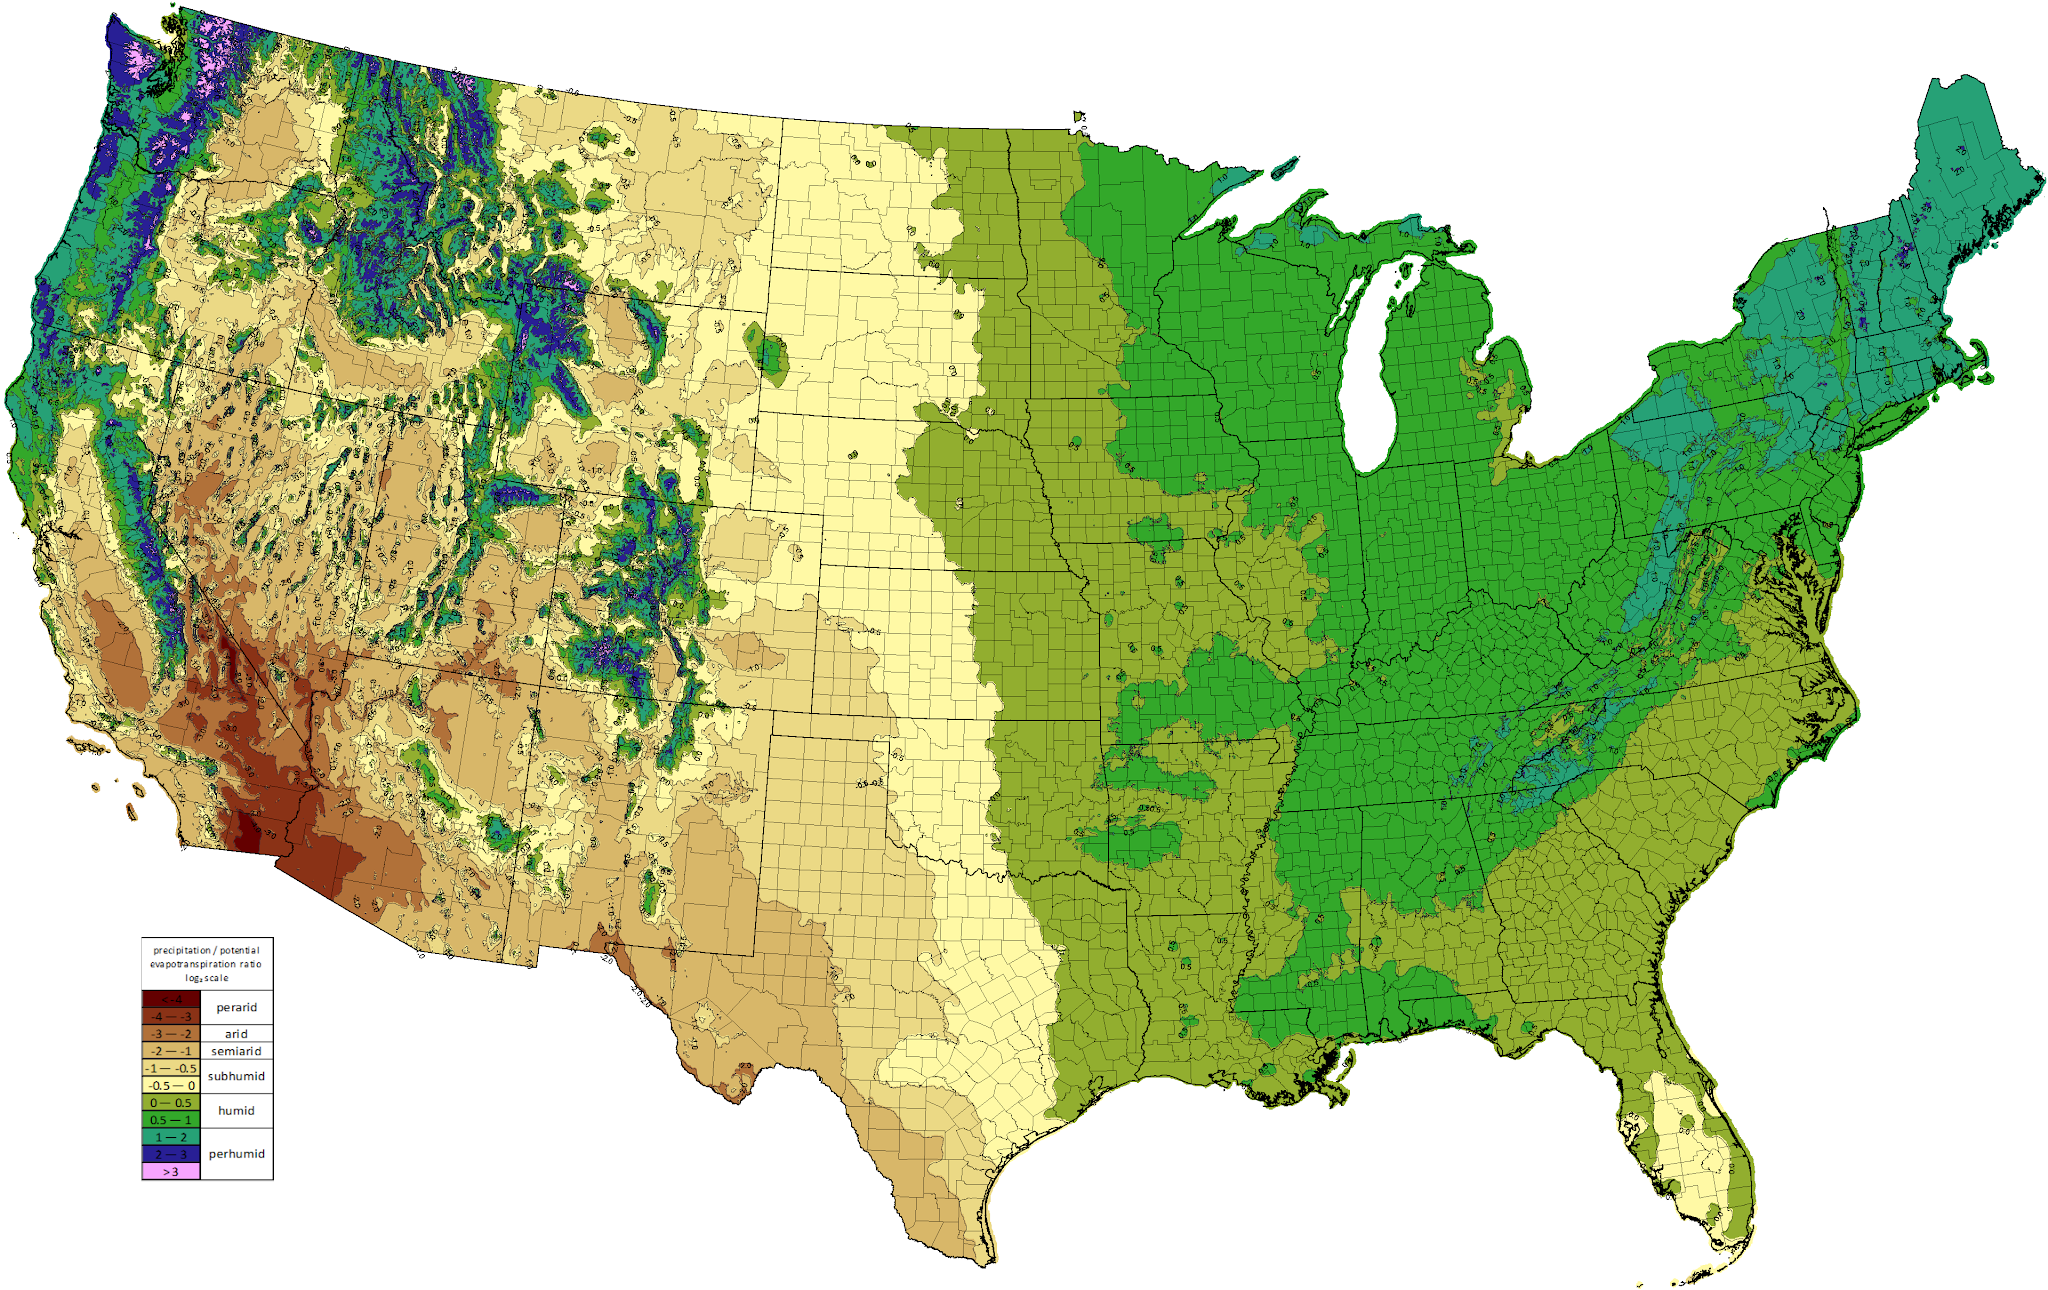 Precipitation potential in every U.S. county